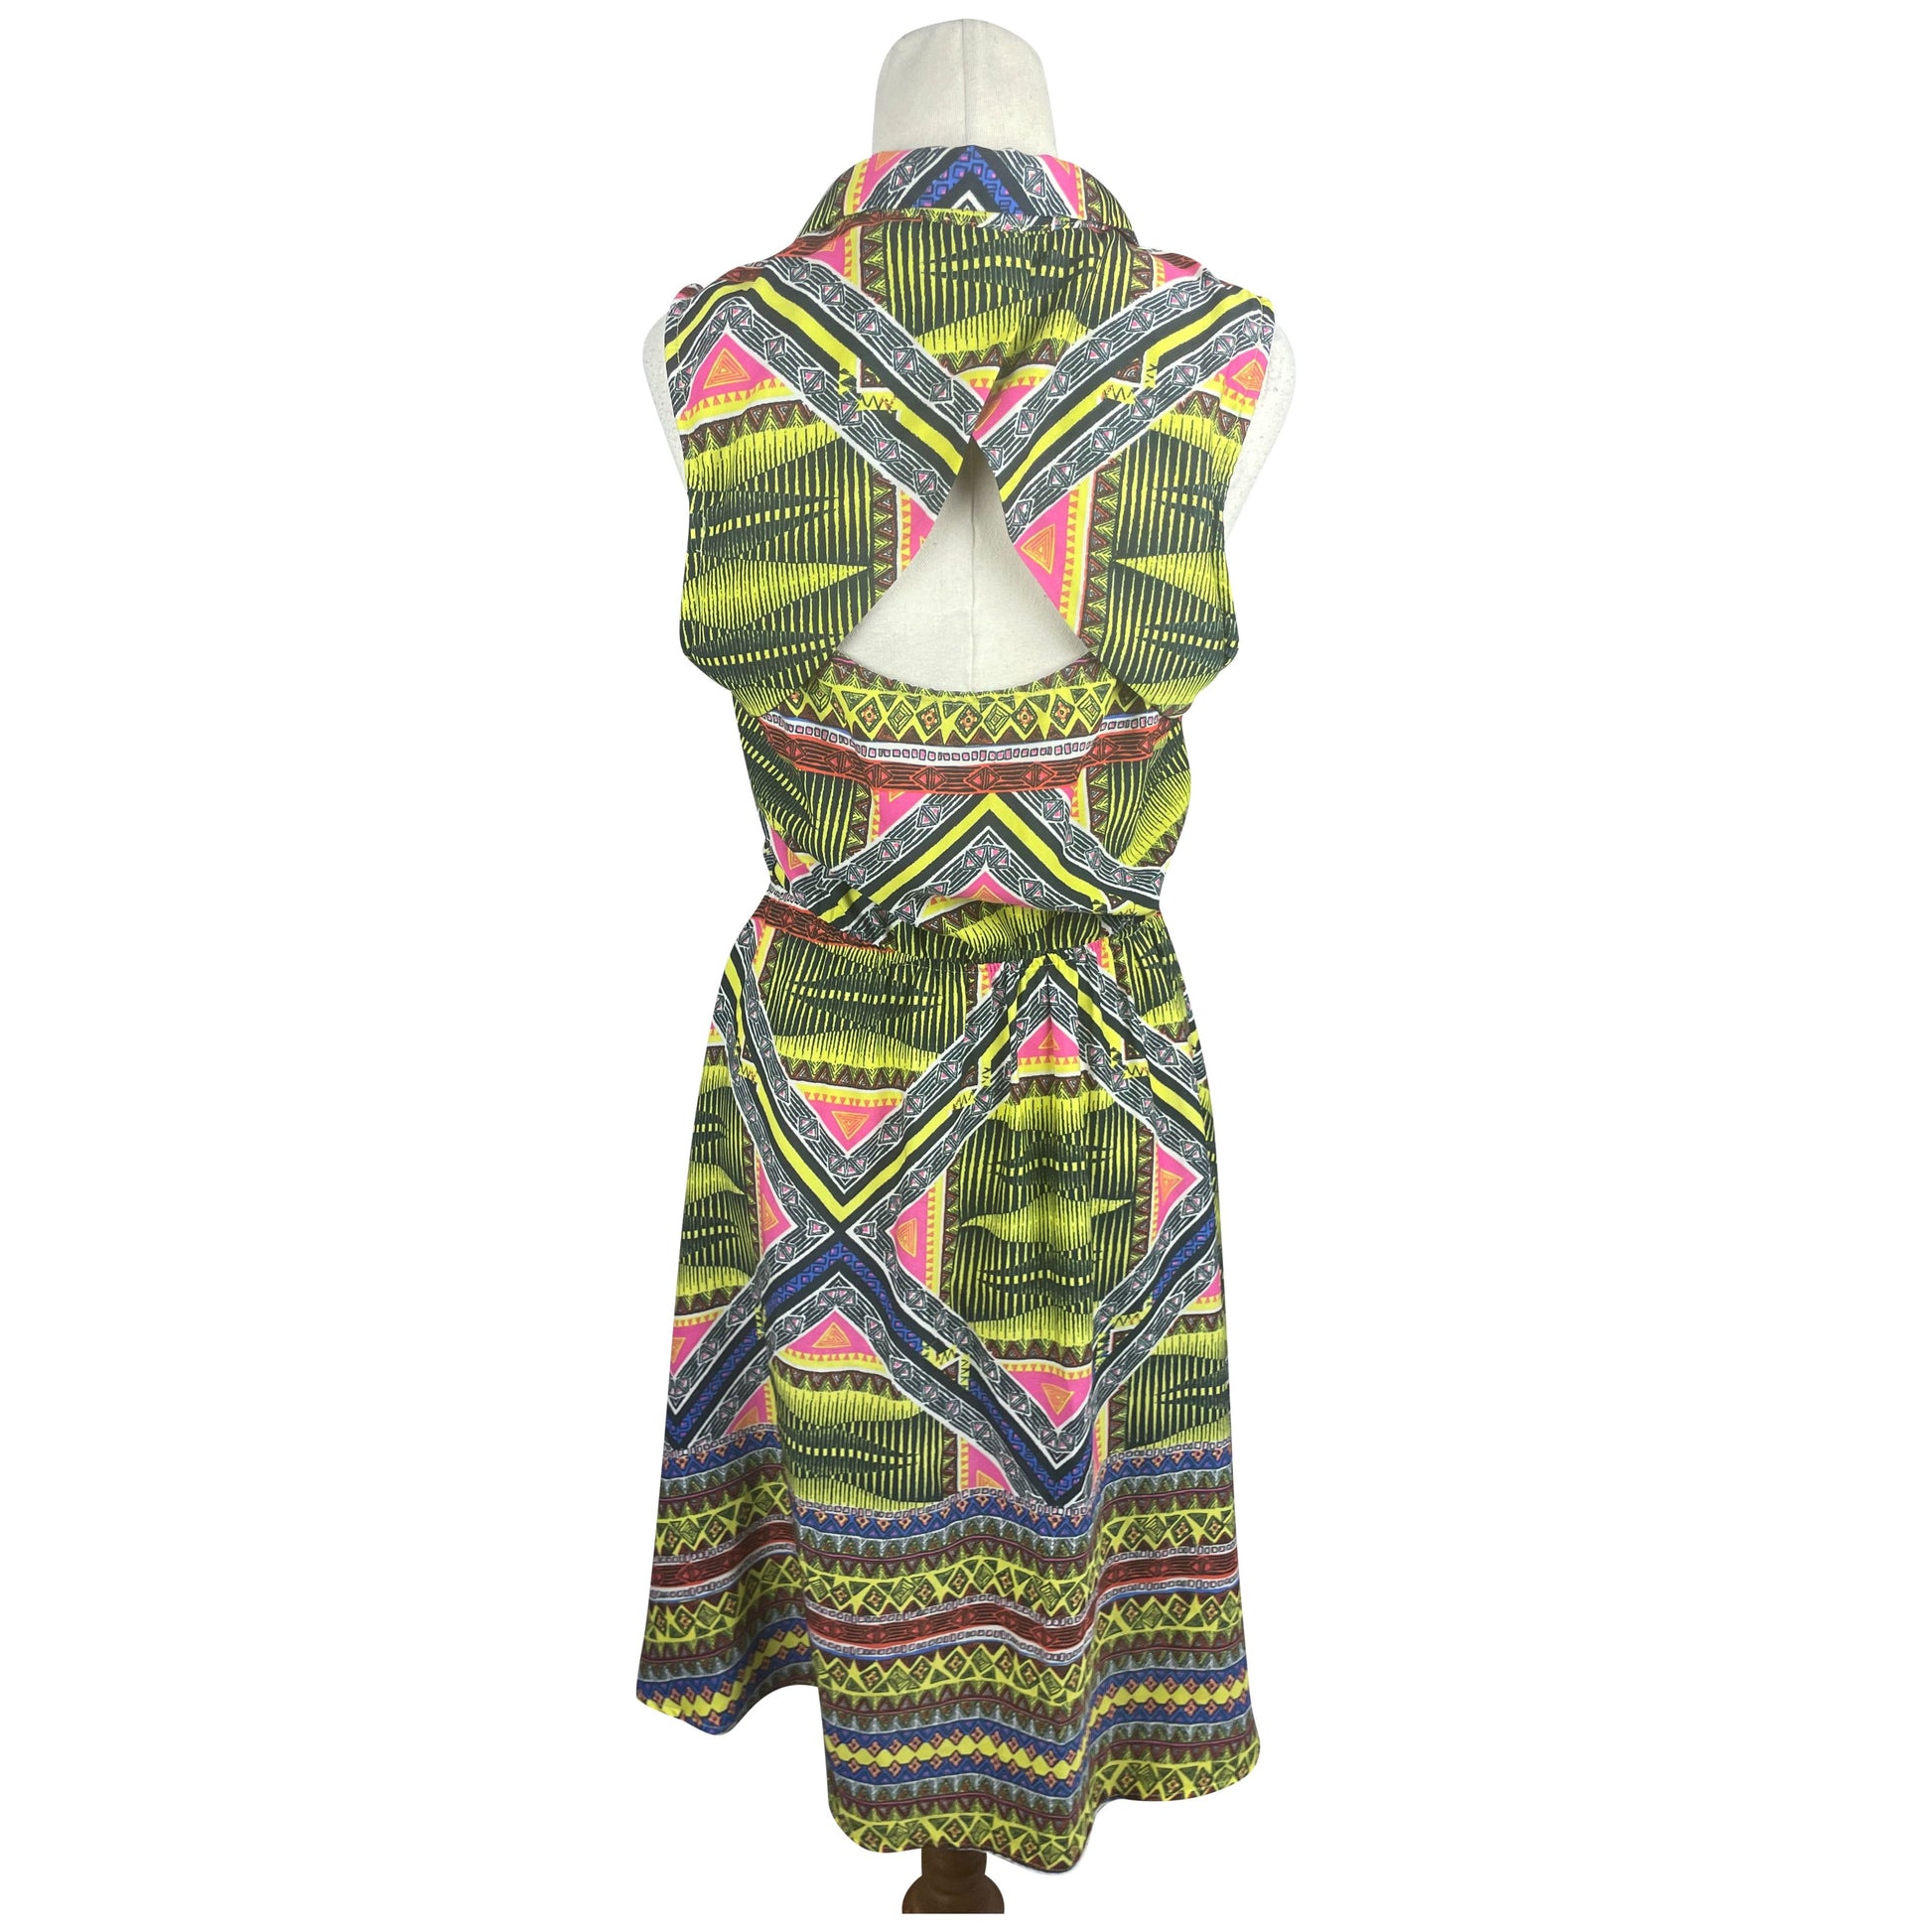 River Island multi coloured Aztec dress | size 10